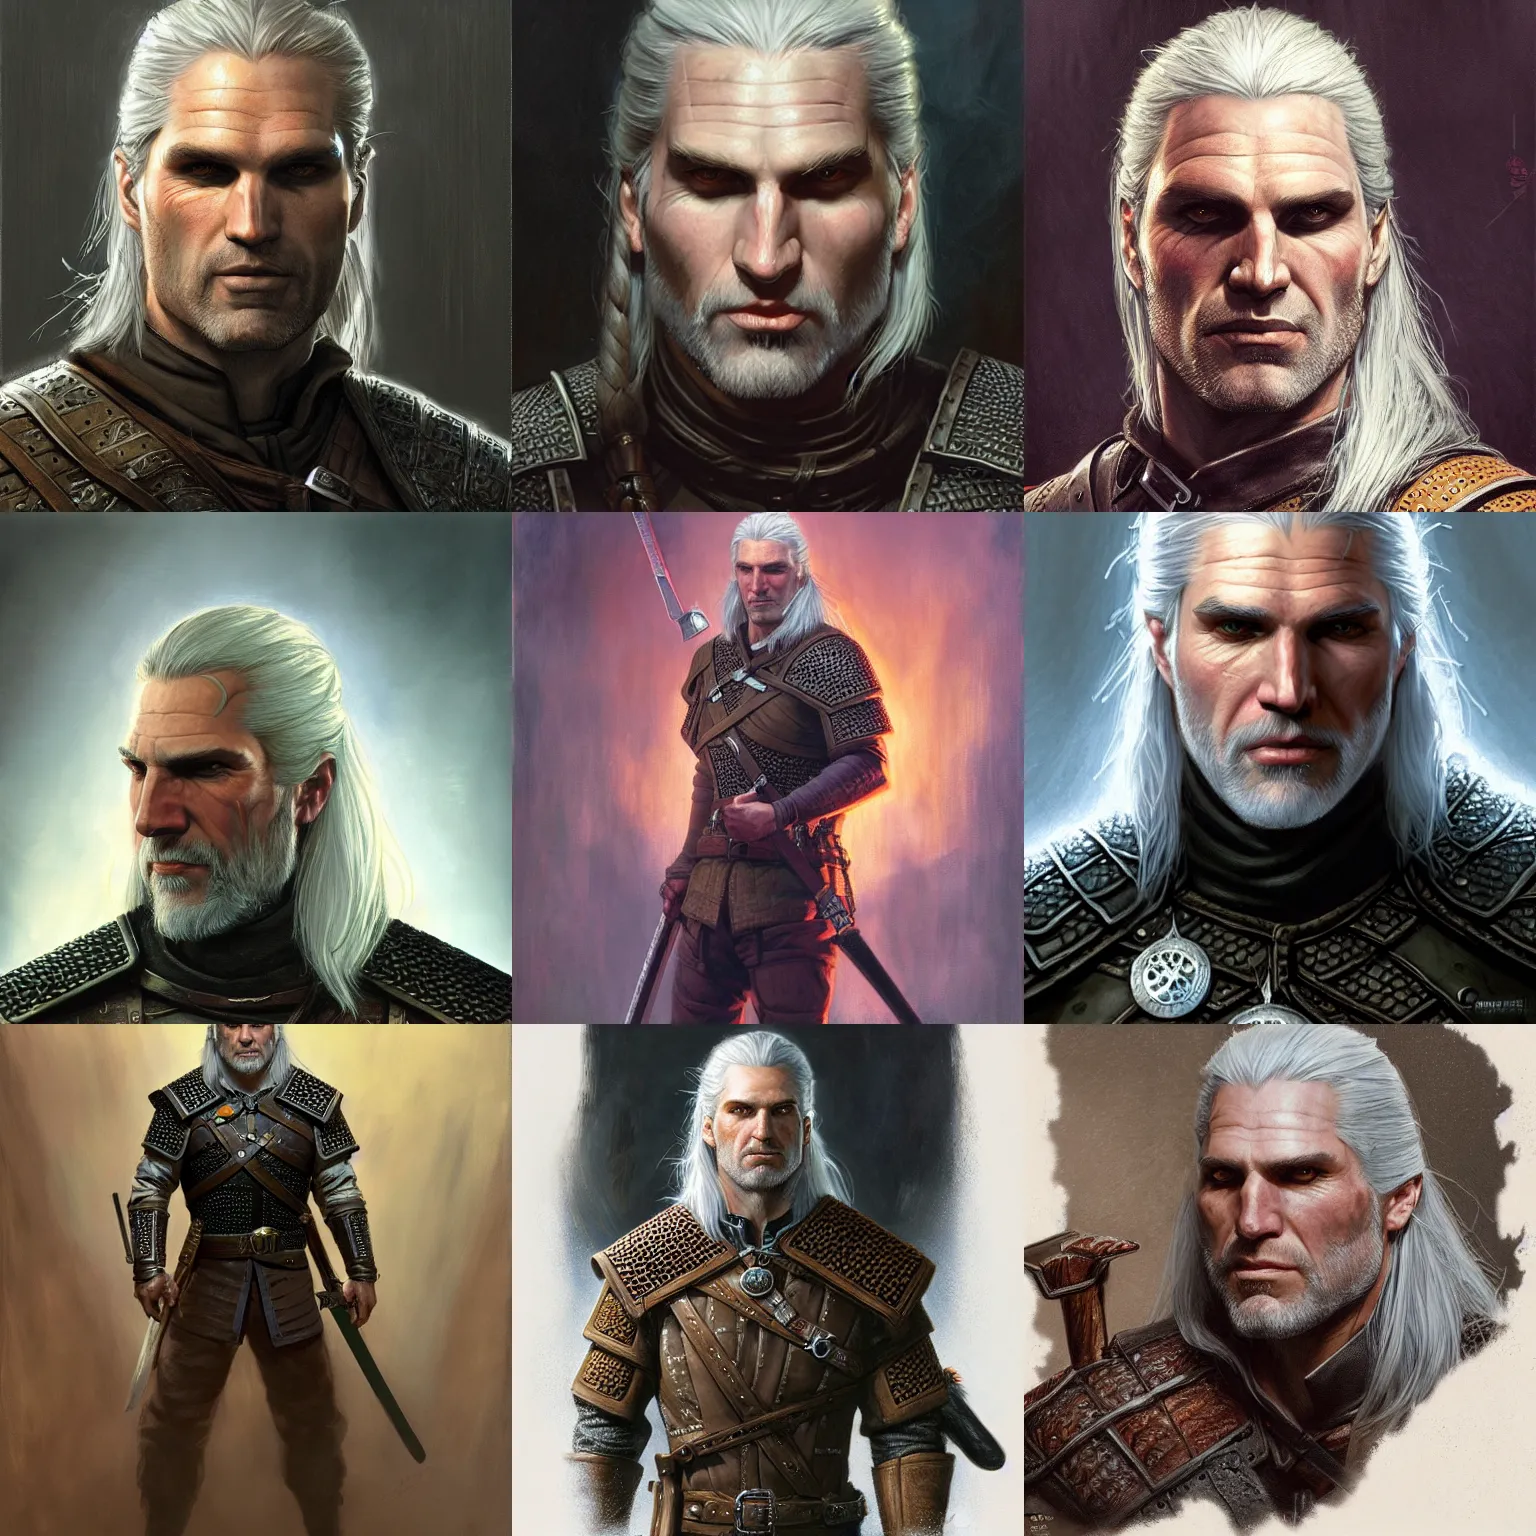 Prompt: Geralt of Rivia, fantasy character portrait art by Donato Giancola, Craig Mullins, digital art, trending on artstation